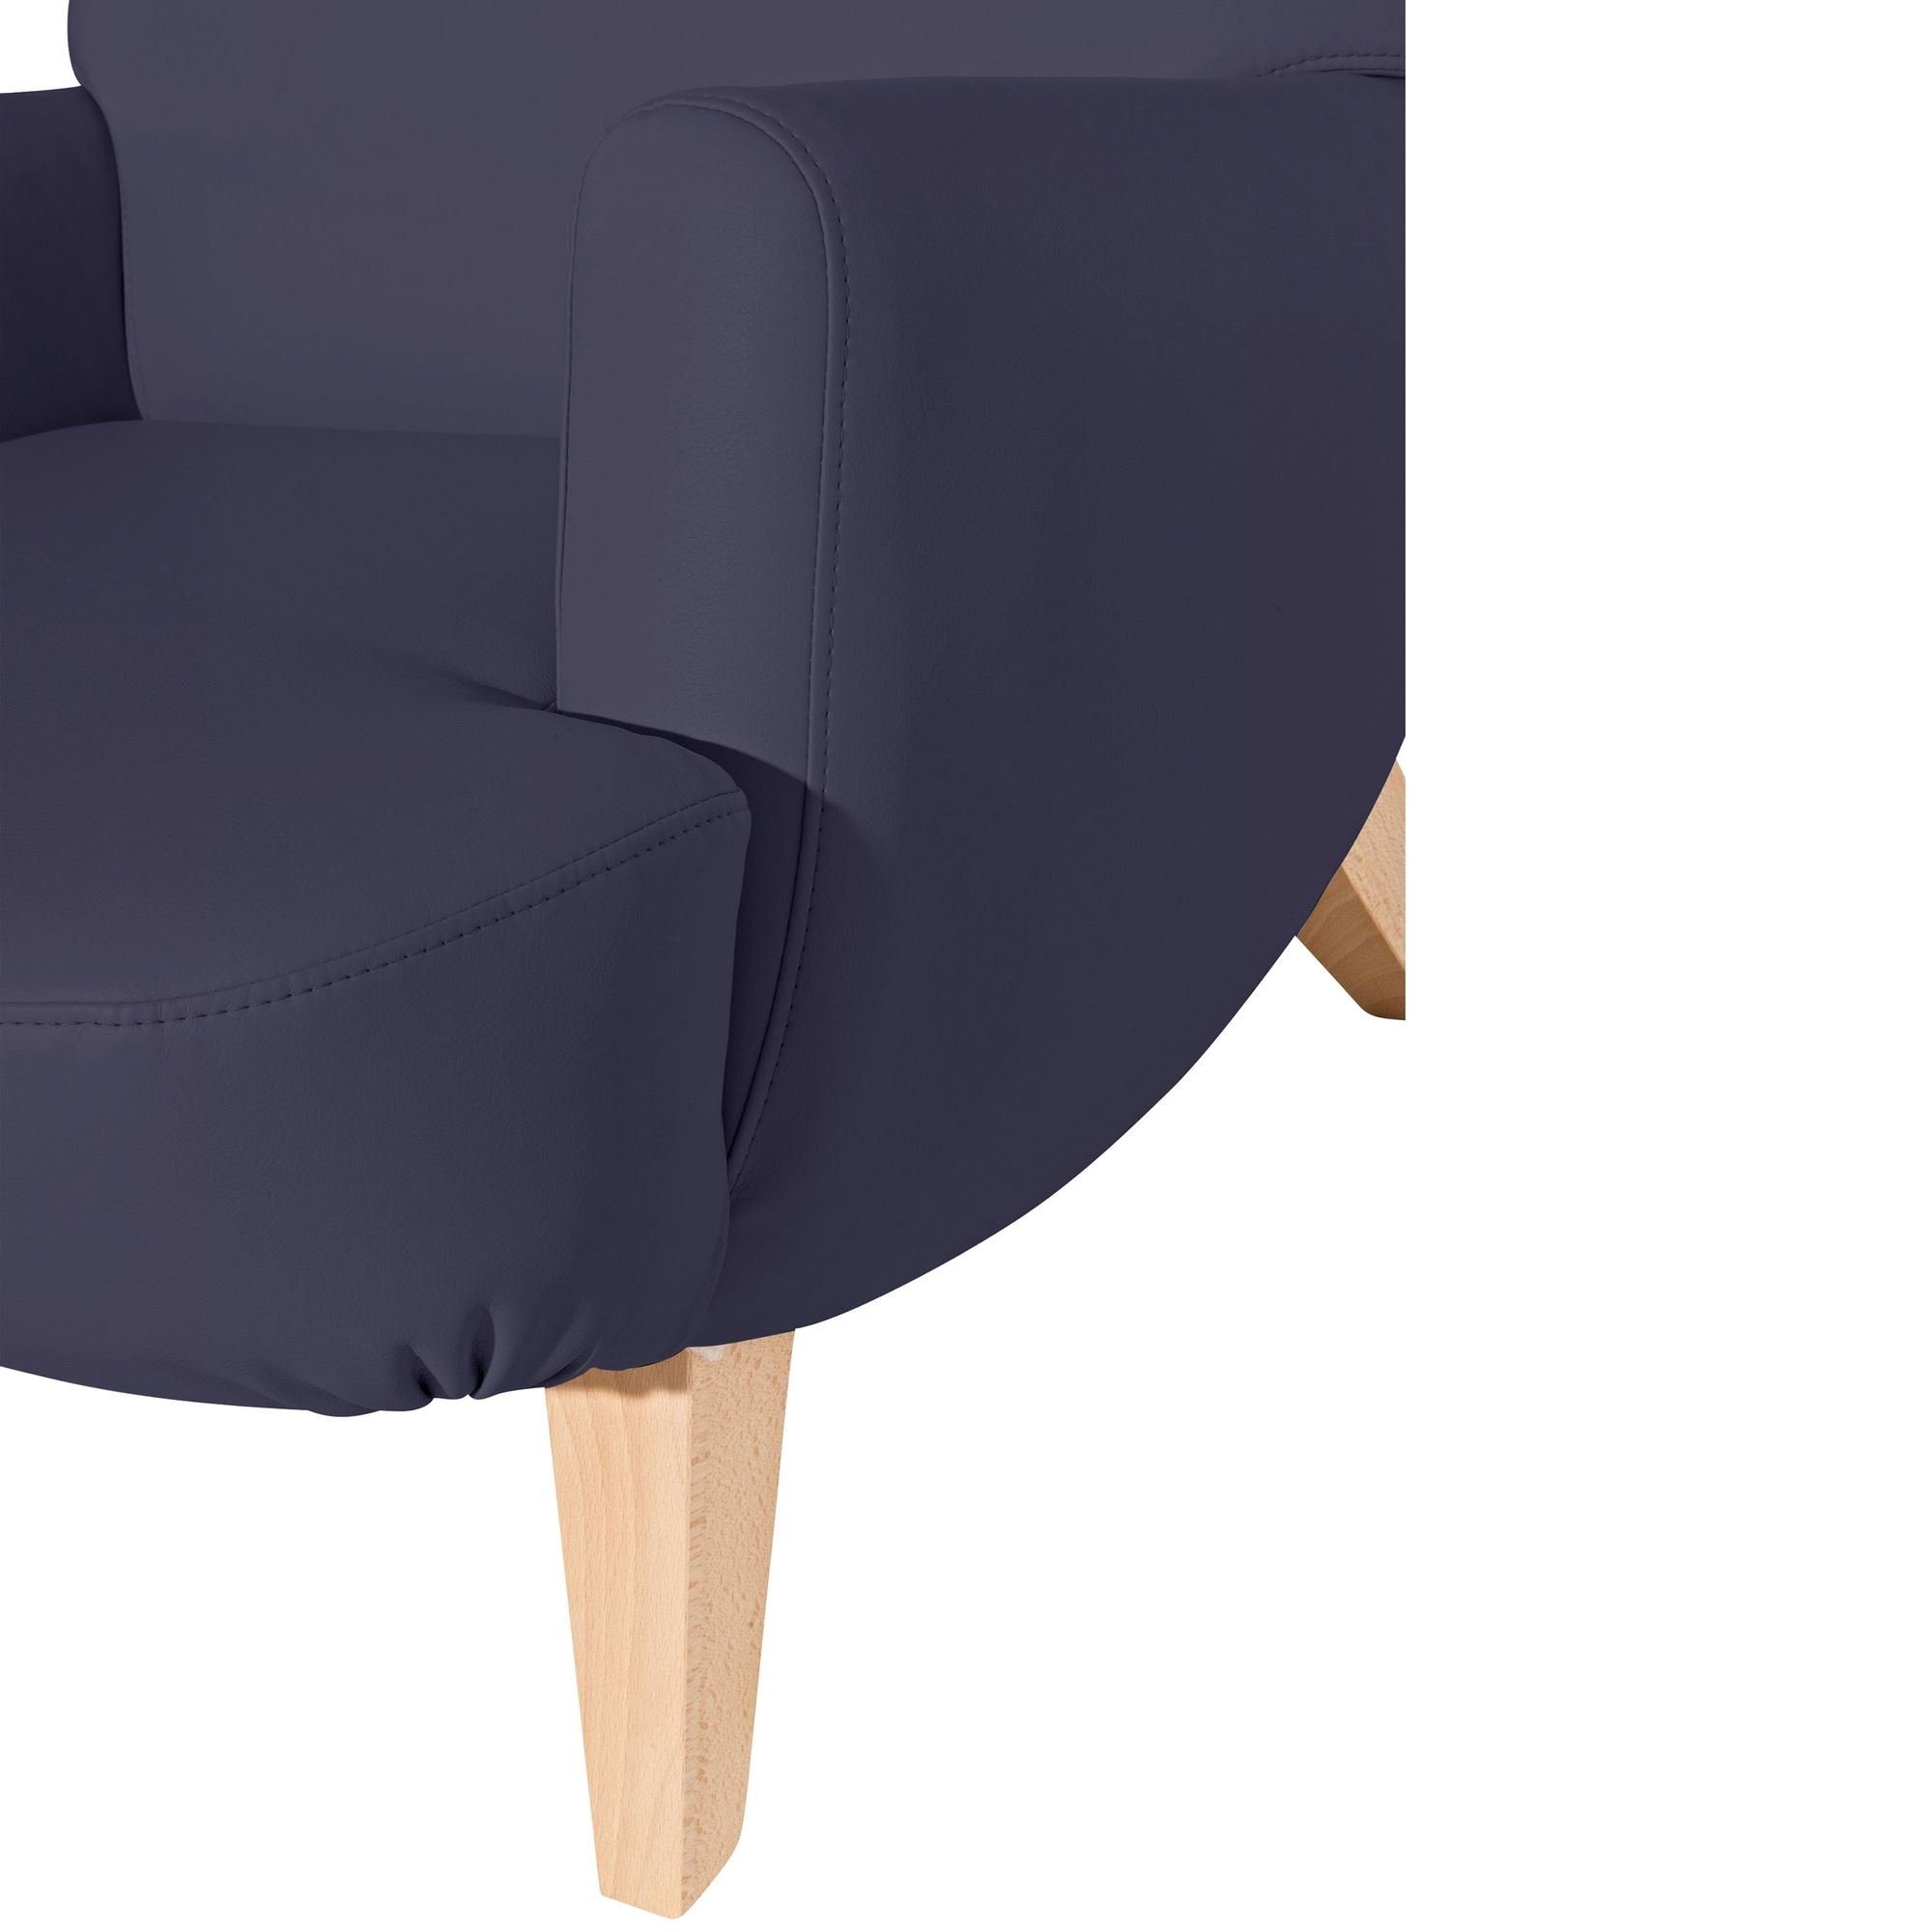 Versand, hochwertig Buche Kajsa Kunstleder aufm inkl. 21332 1-St), Kostenlosem 58 verarbeitet,bequemer Bezug Sessel dunkelblau (Sparpreis Kessel natur Sessel Sitz /